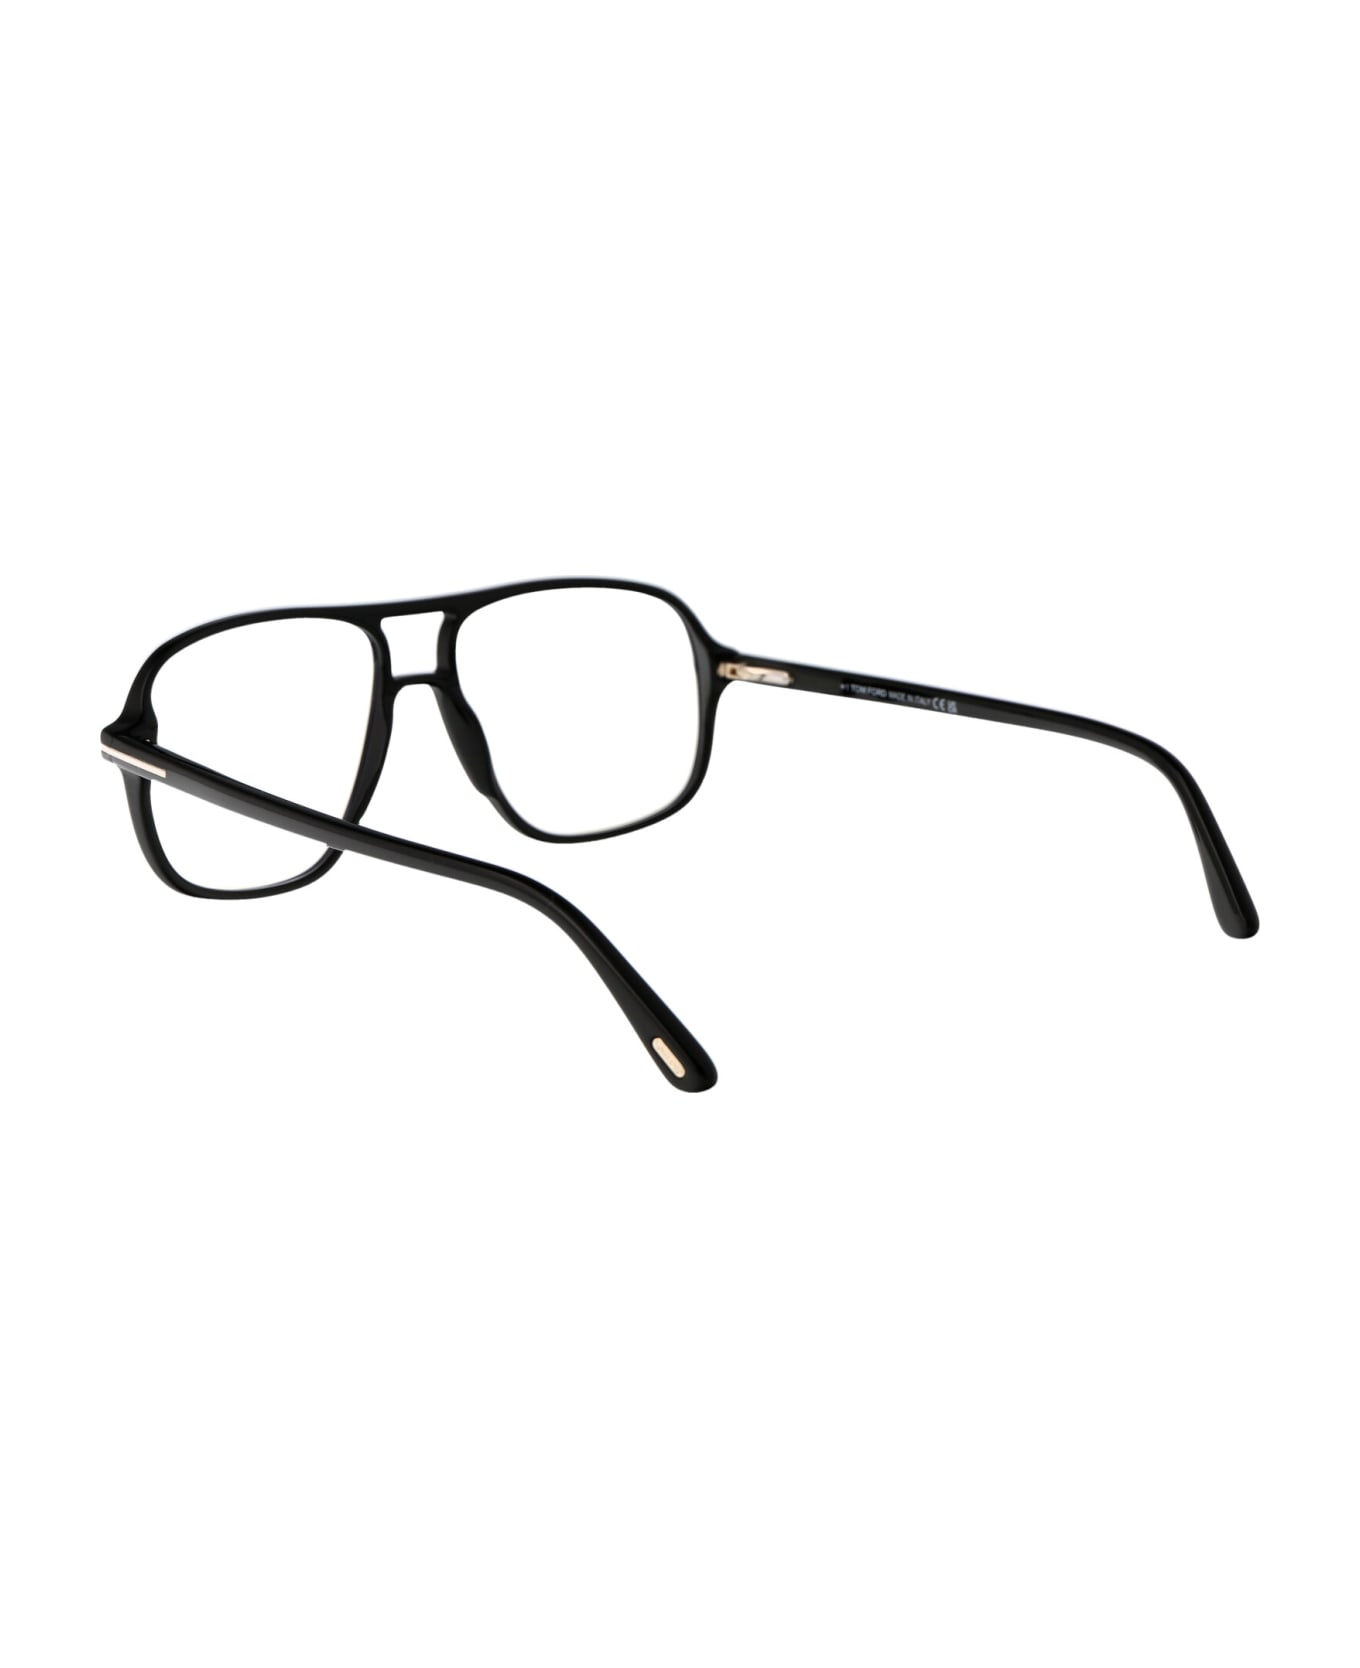 Tom Ford Eyewear Ft5737-b Glasses - 001 Nero Lucido